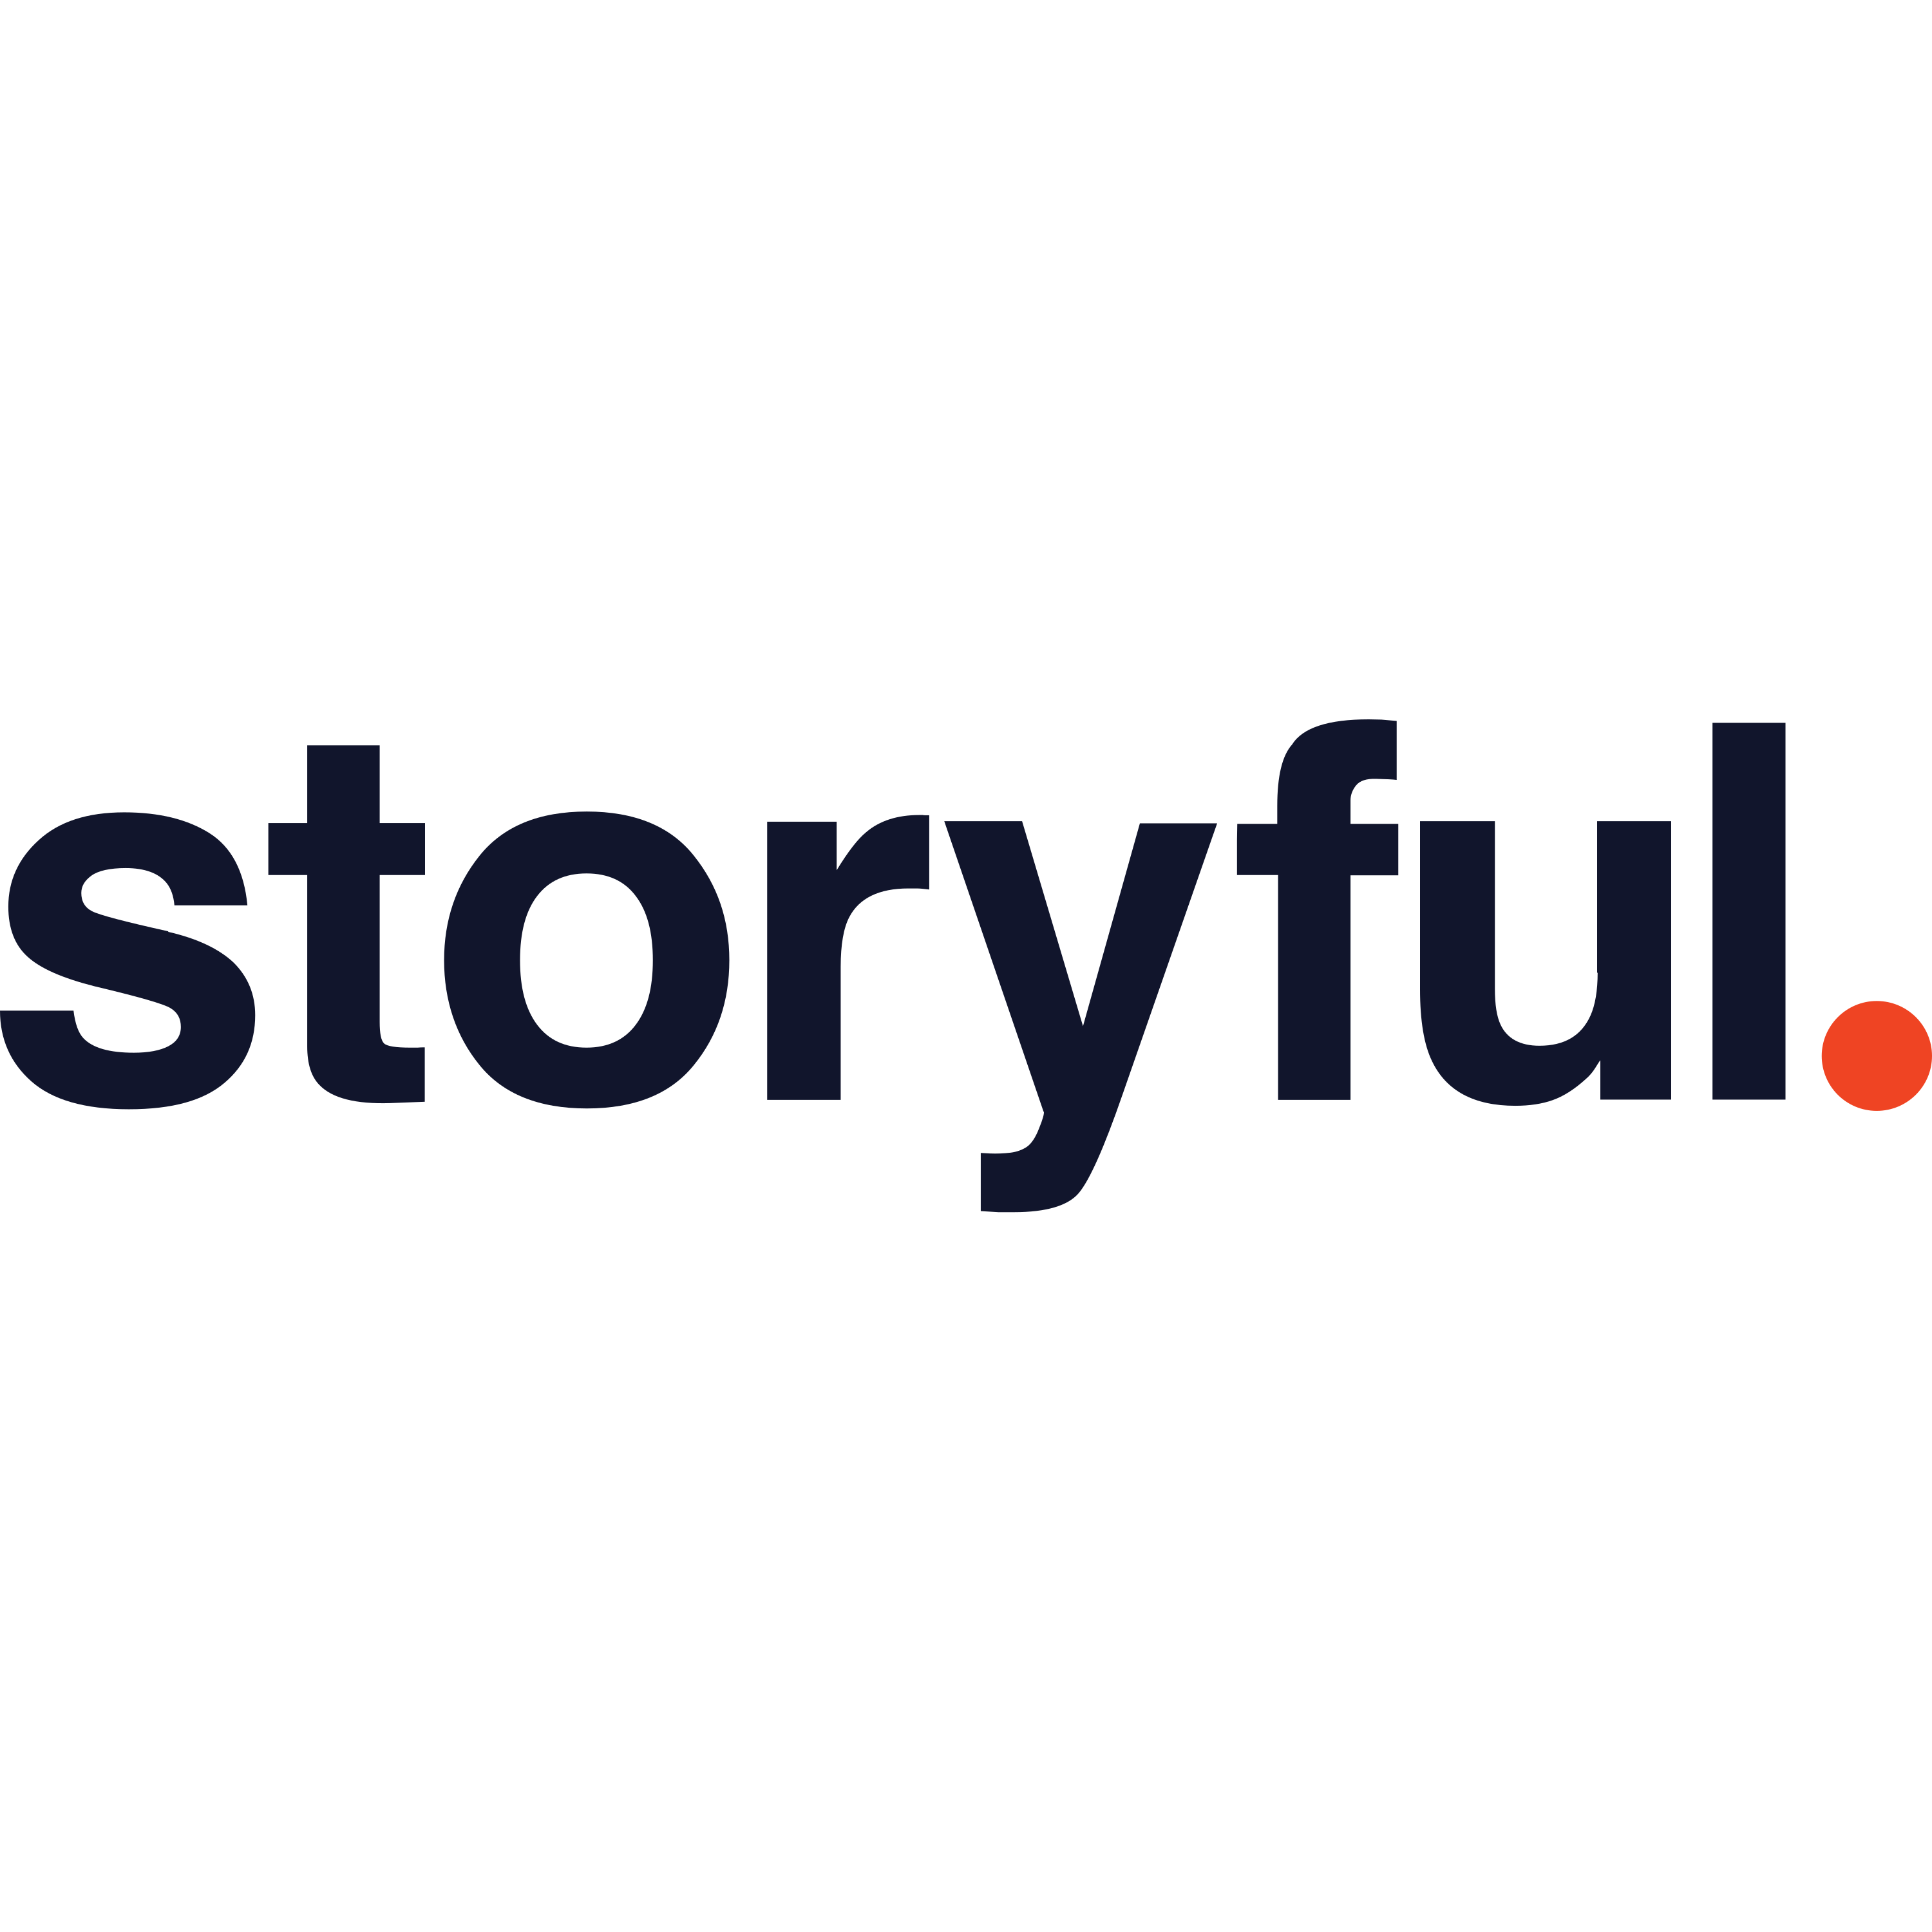 Storyful Logo  Transparent Image